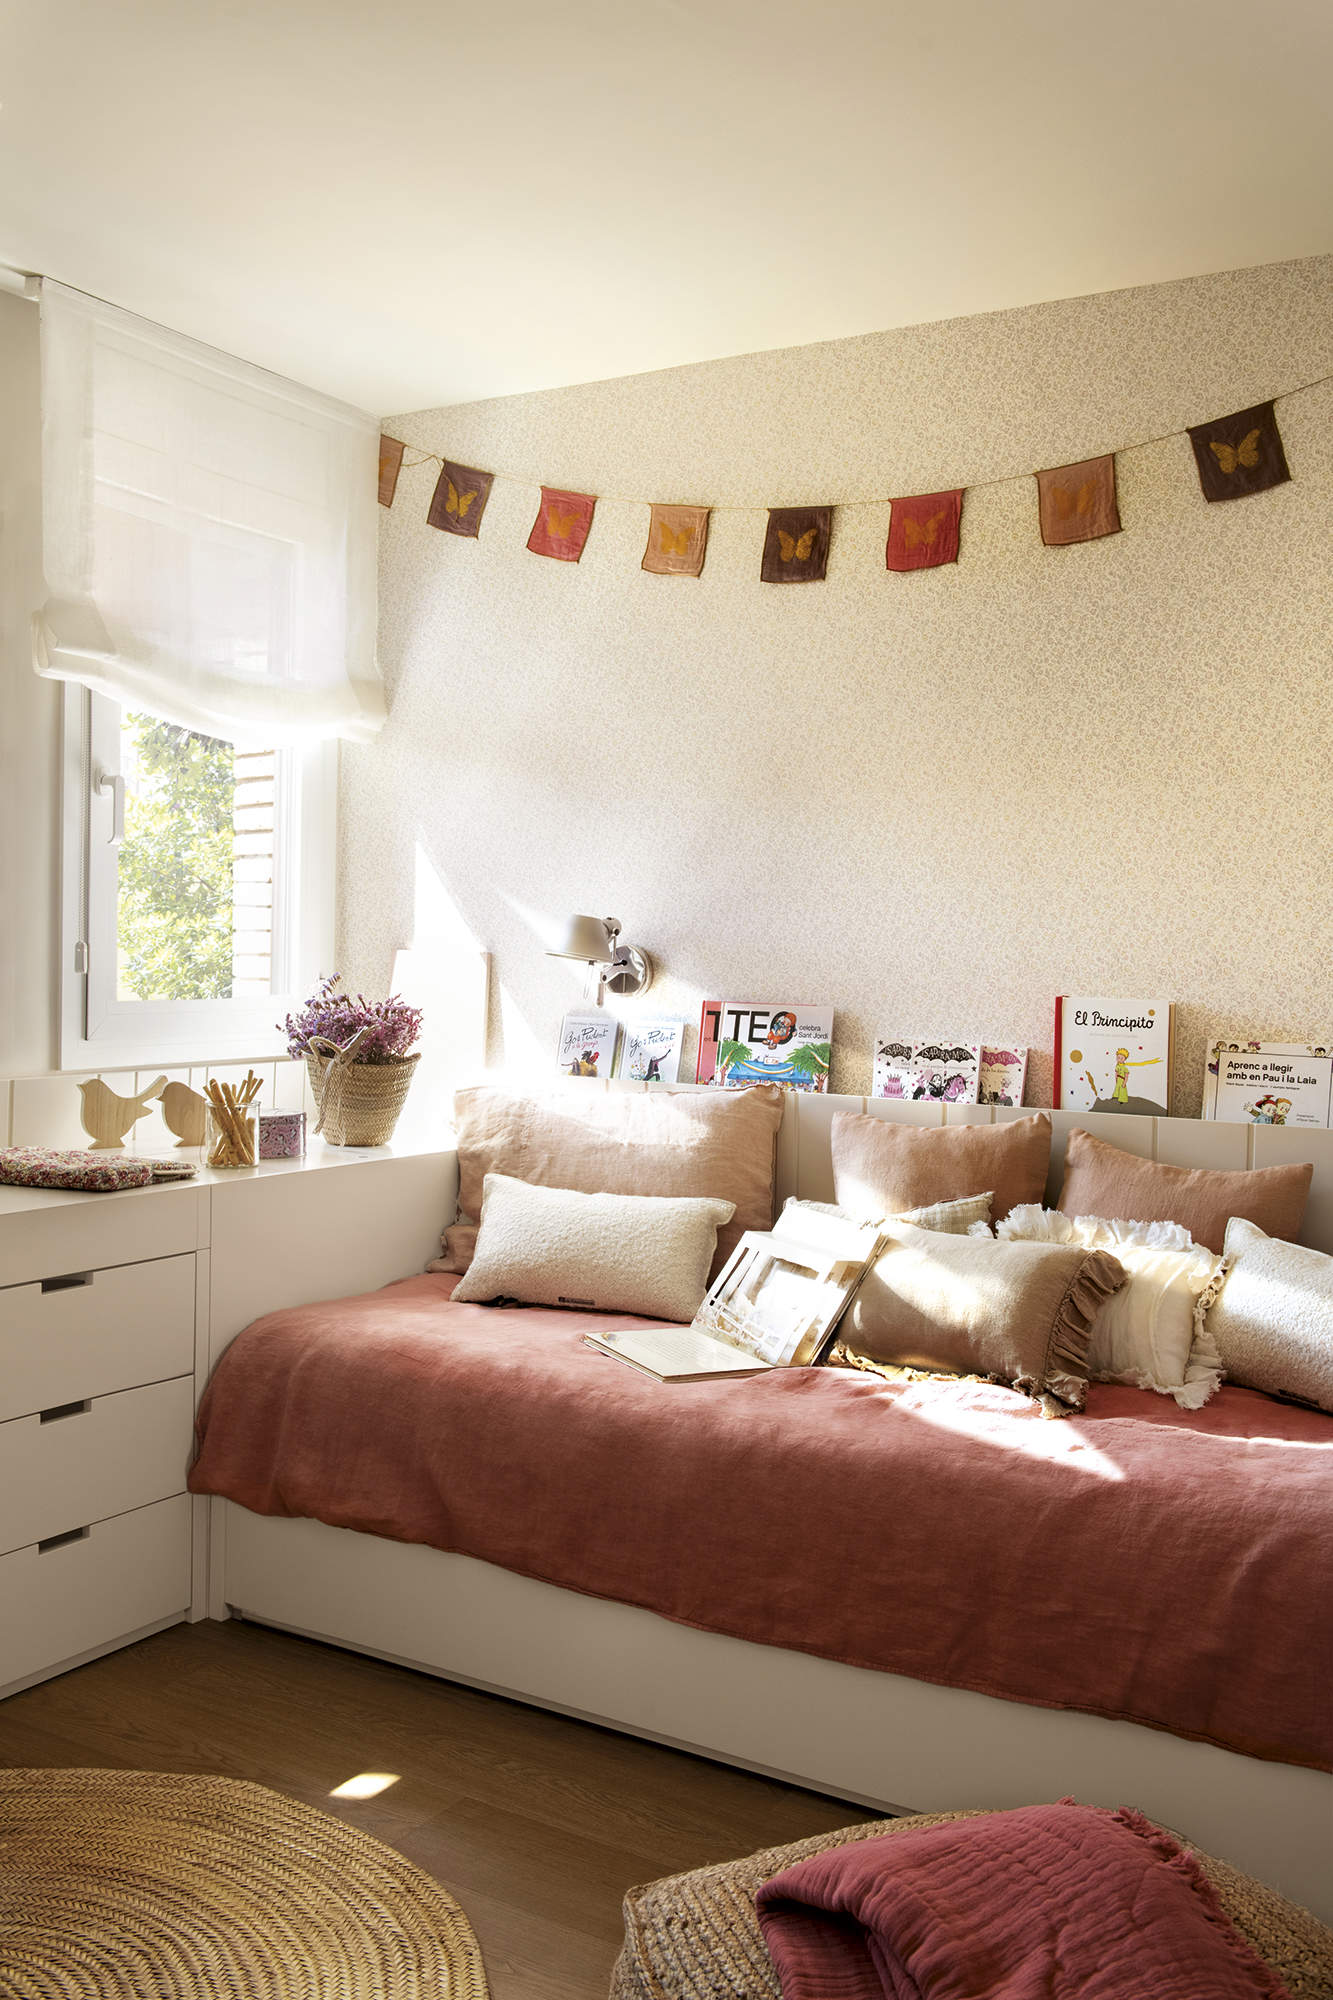 Dormitorio infantil, dormitorio juvenil, colcha morada, suelo de madera, empapelado, mueble a medida, estor, alfombra de yute.